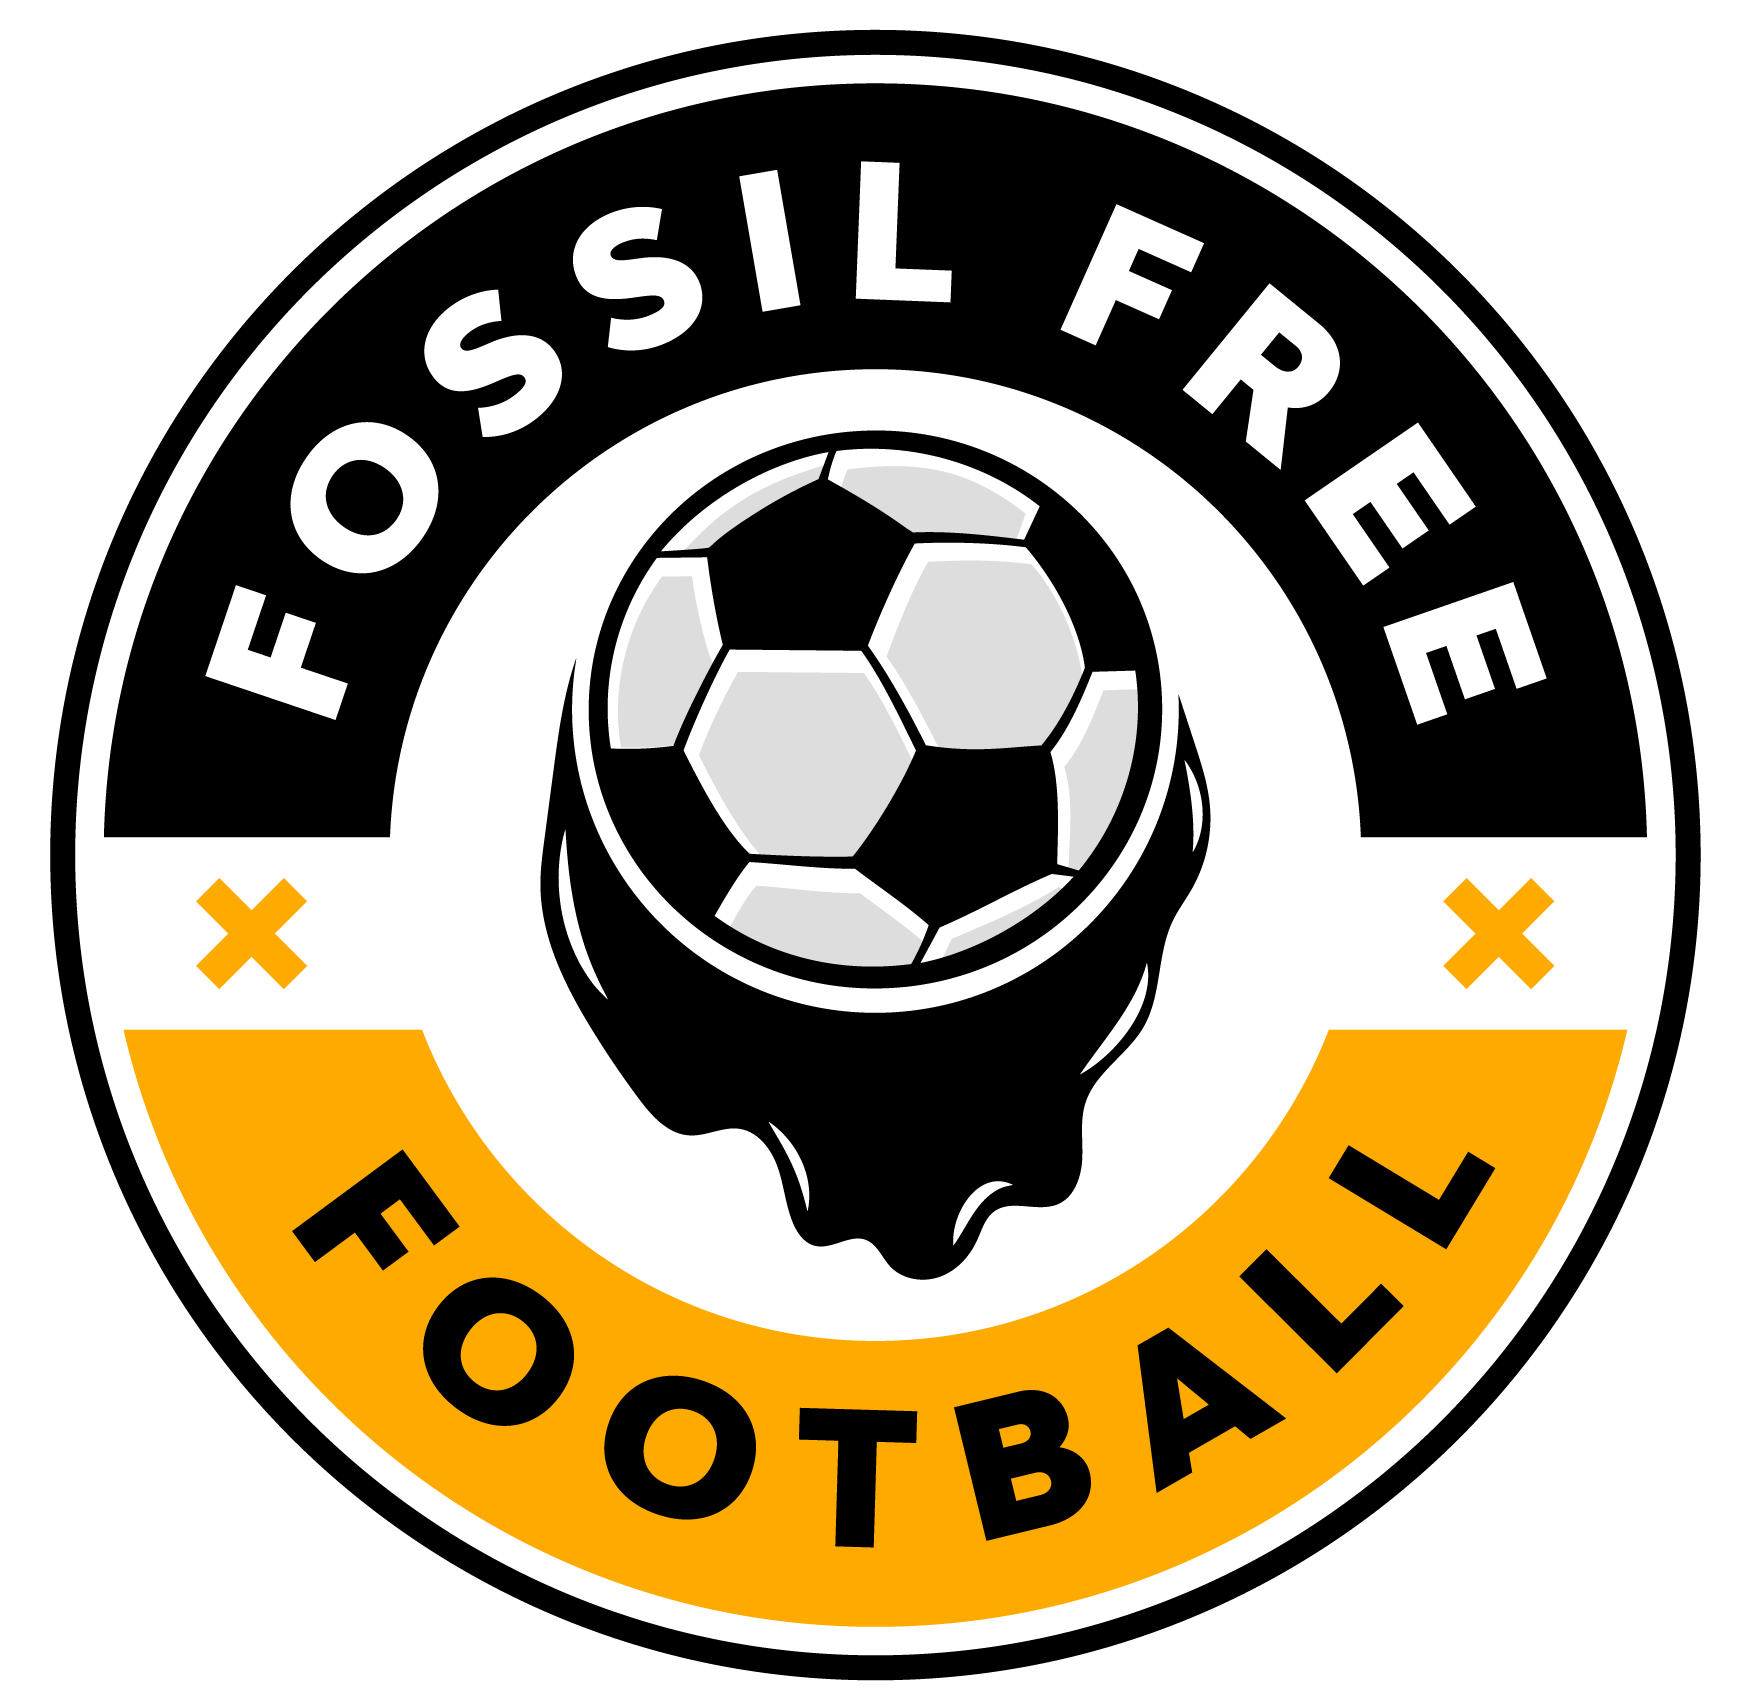 FossilFreeFootball